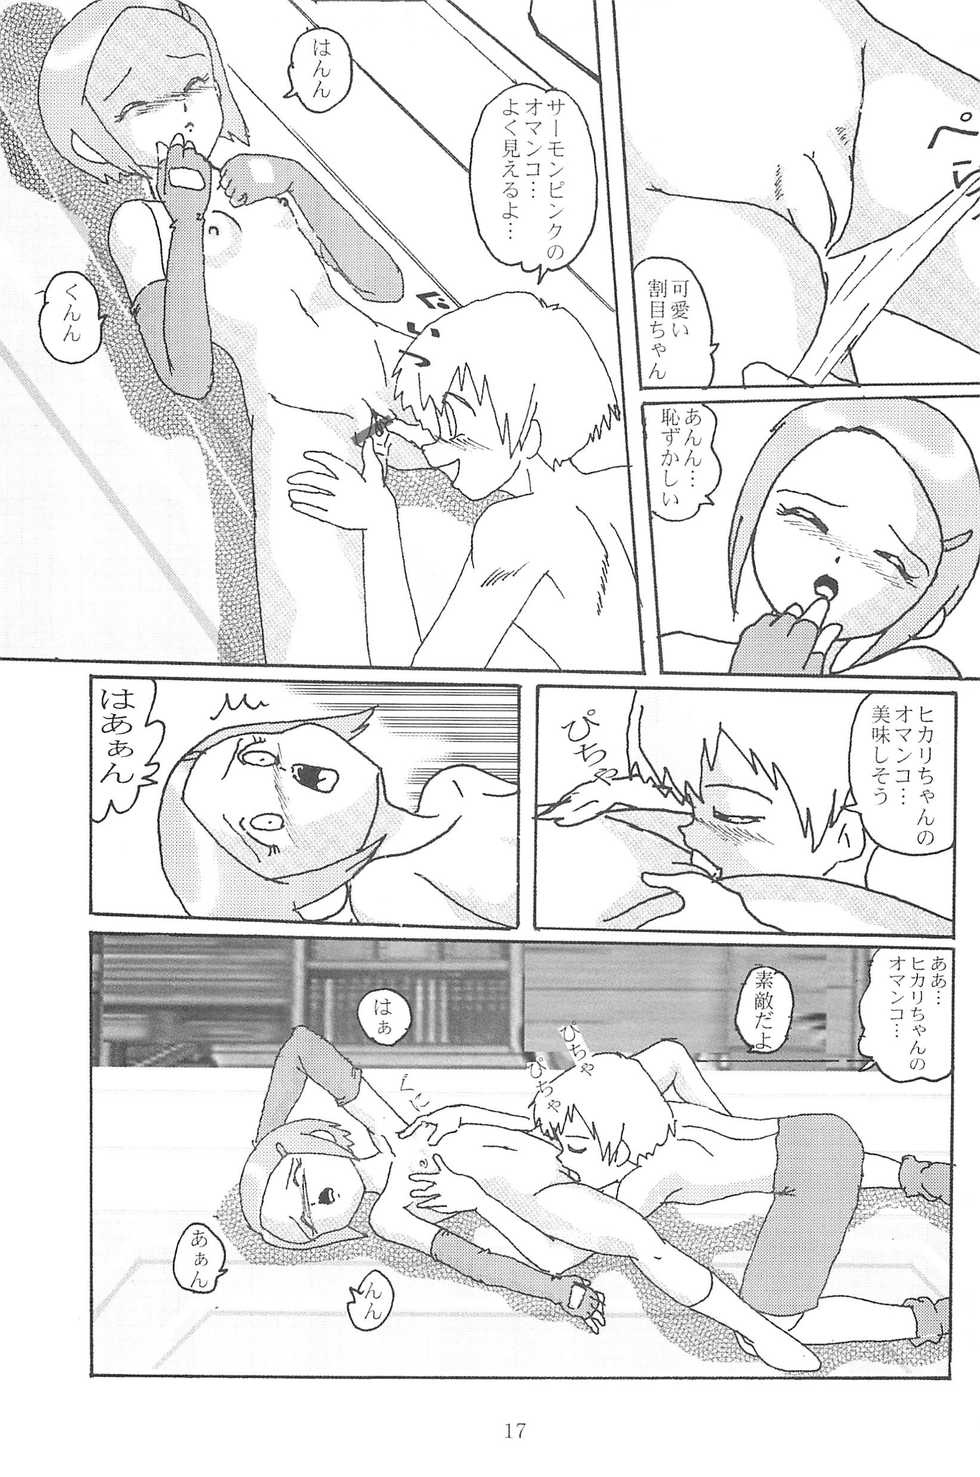 (CR28) [Izumiya] Blow Up 8 (Digimon Adventure 02) - Page 19